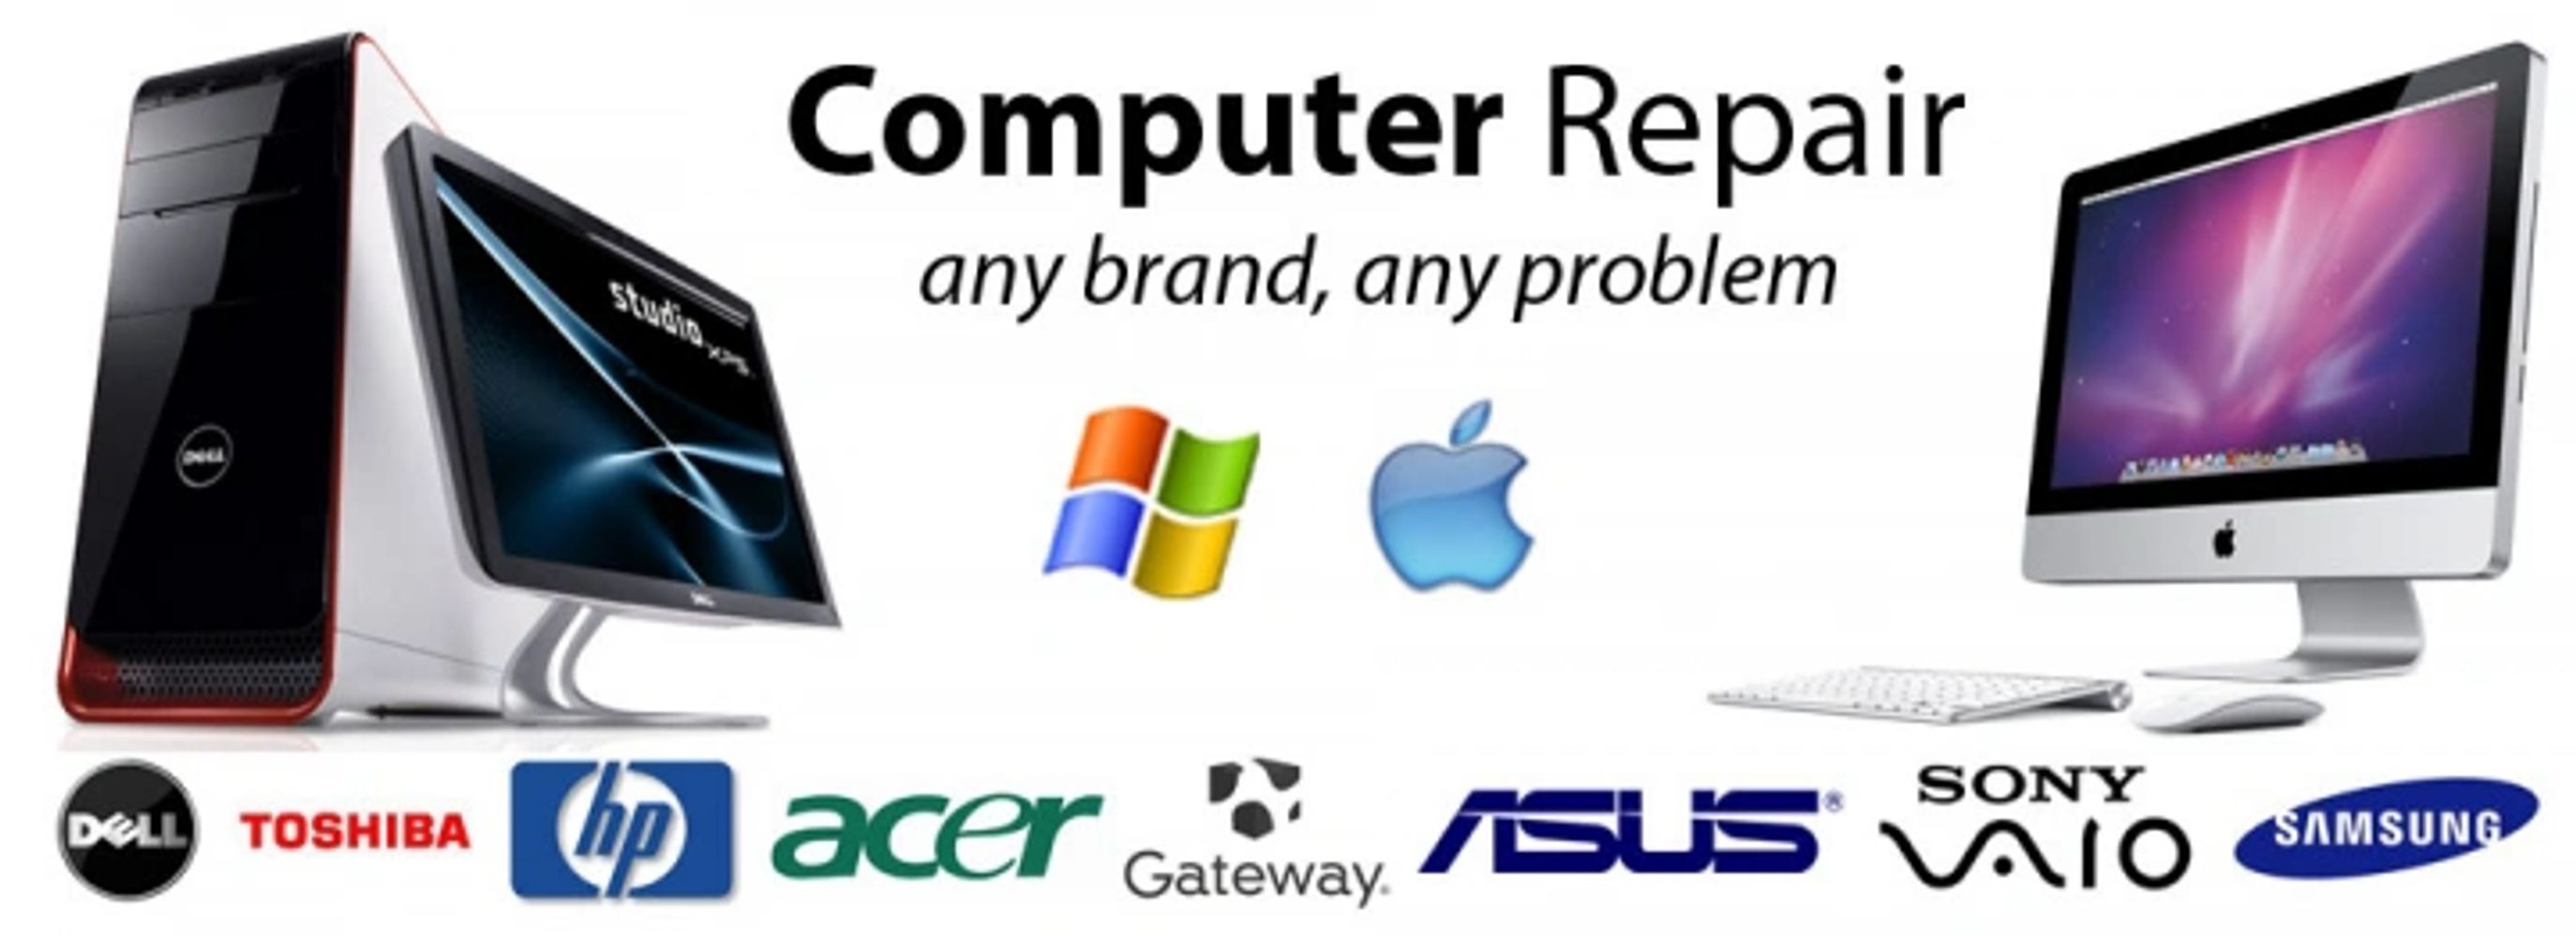 computer repair, computer sales, refurbished laptops, IT, networking, web design, asus, nvidia, 